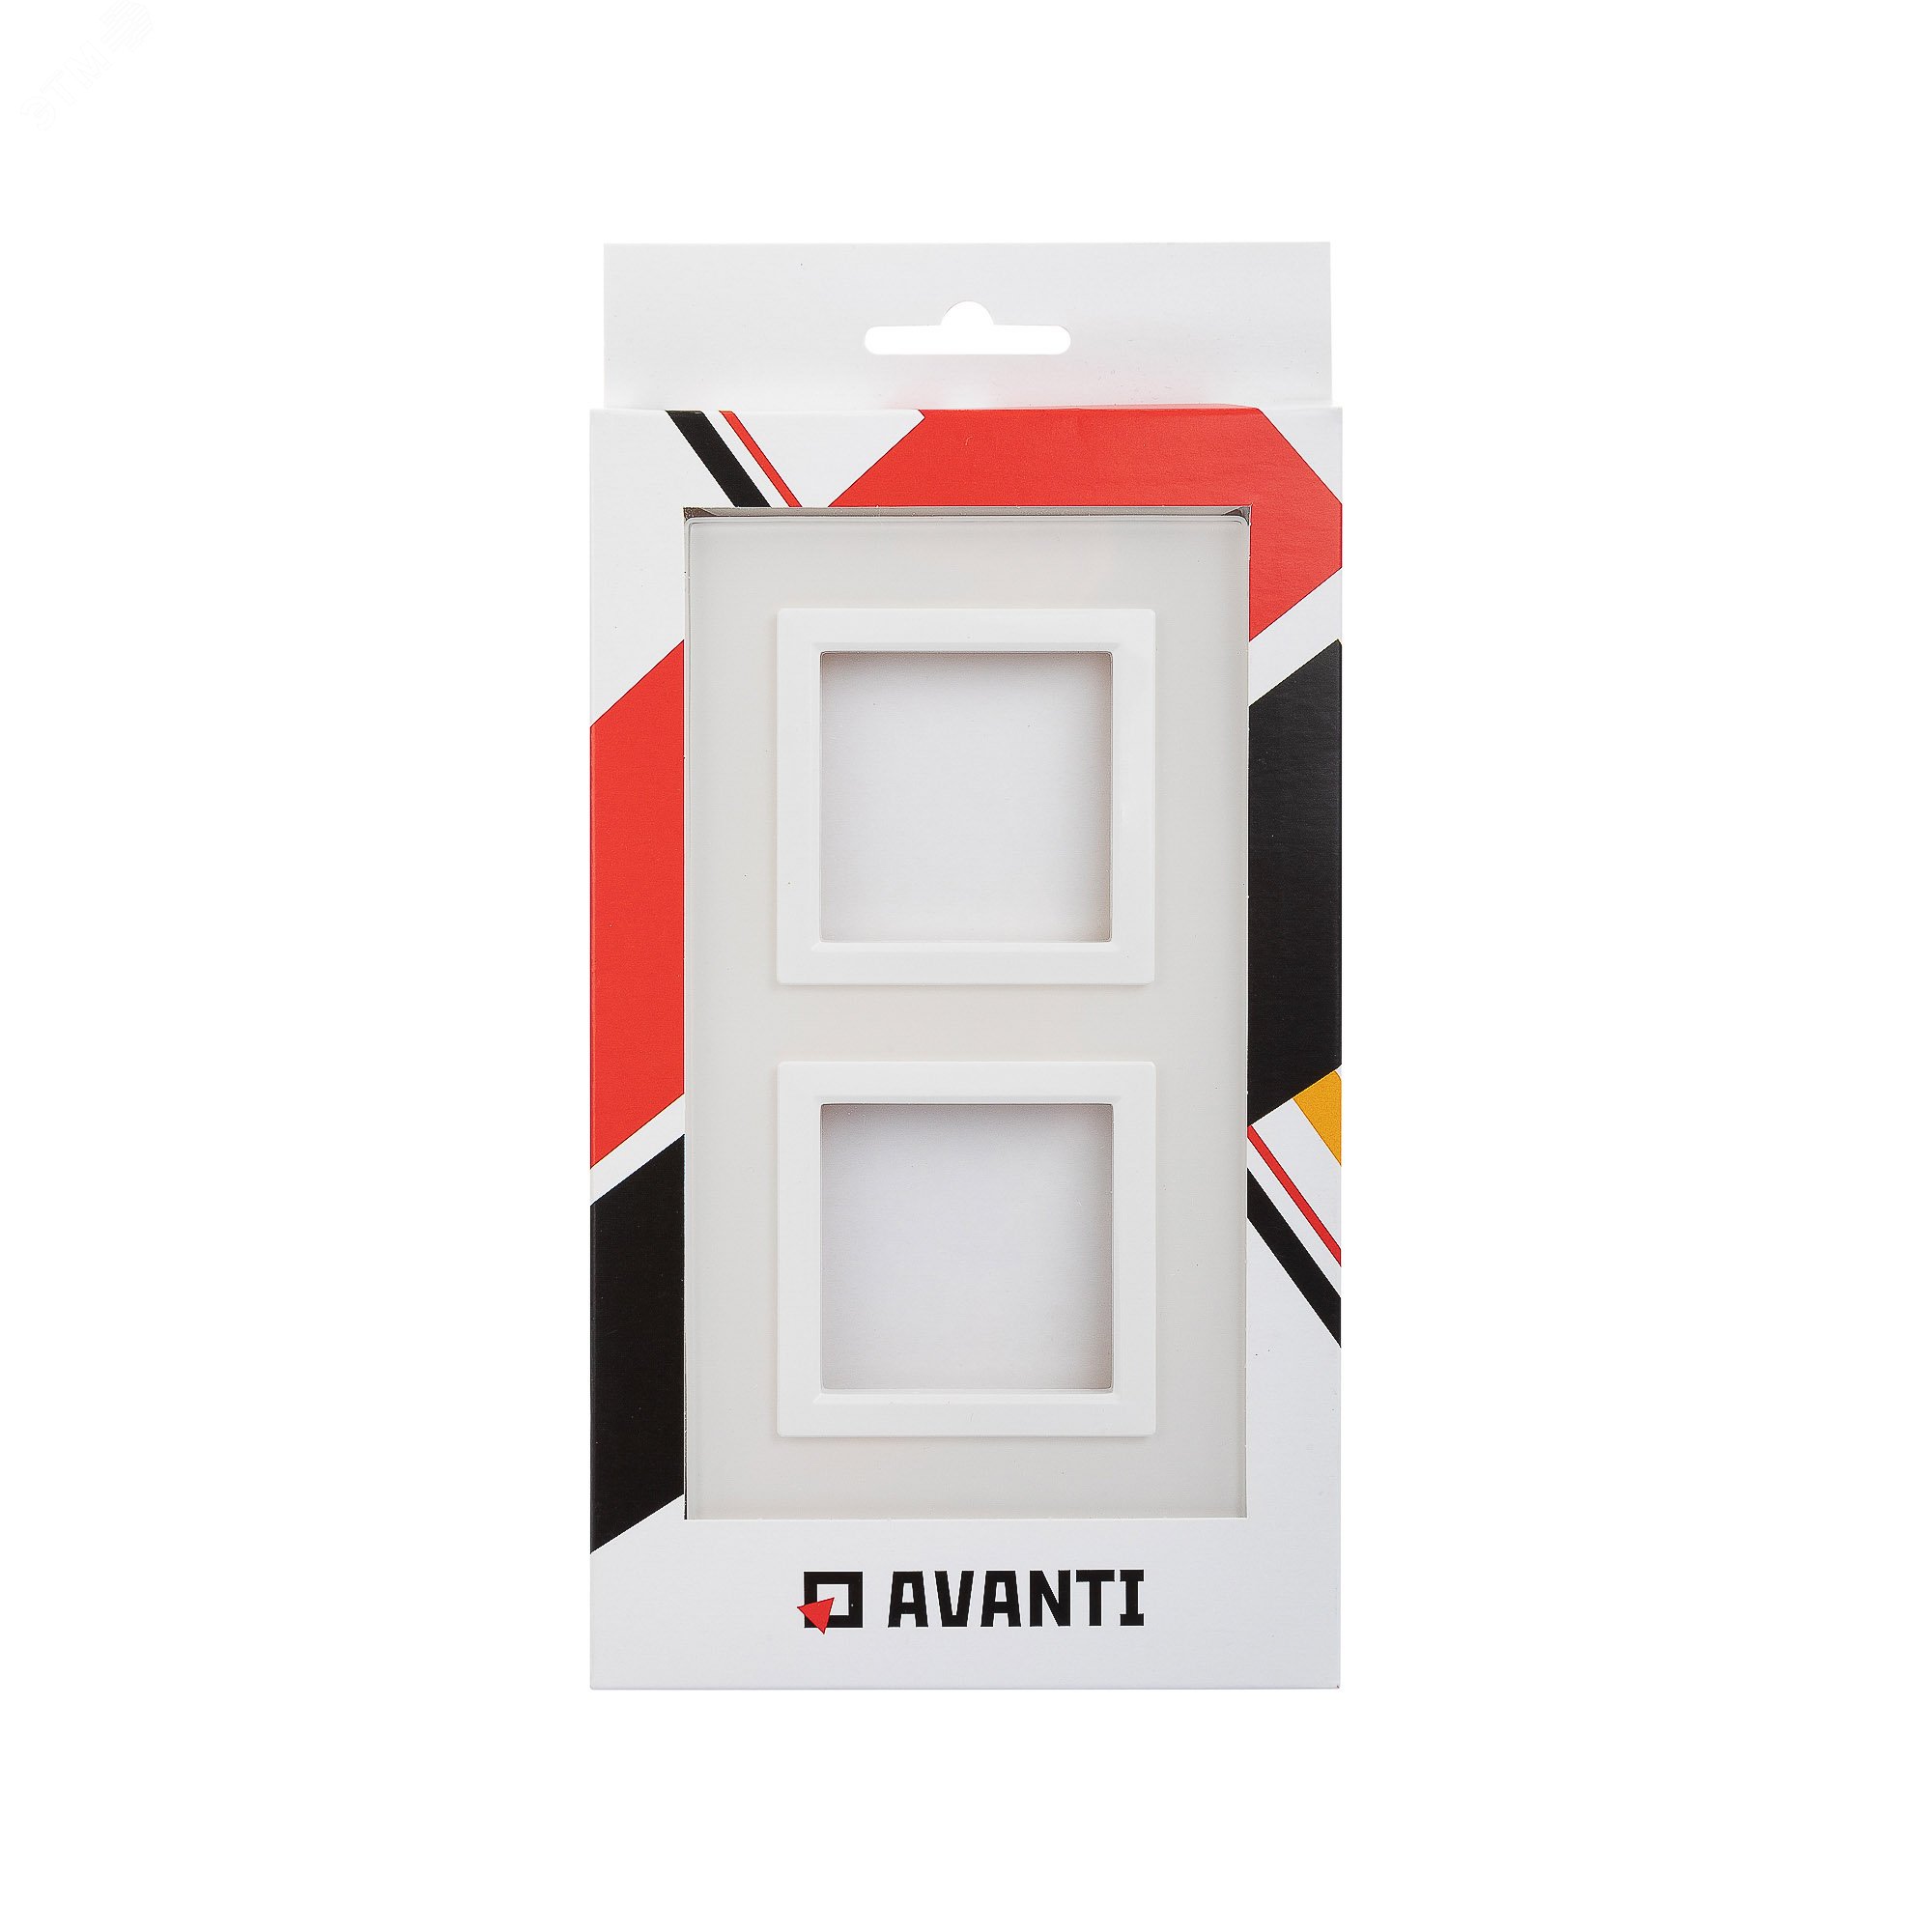 Рамка из натурального стекла, ''Avanti'', белая, 4 модуля 4400824 DKC - превью 6